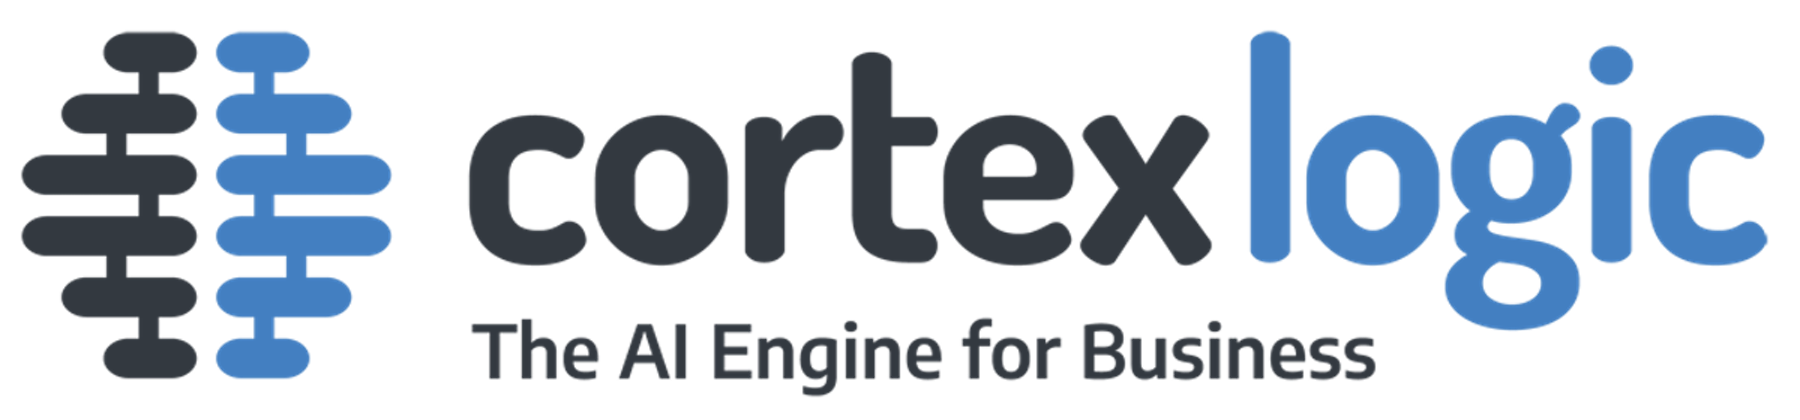 Cortex-Logic-Logo-Banner-Full-Colour large